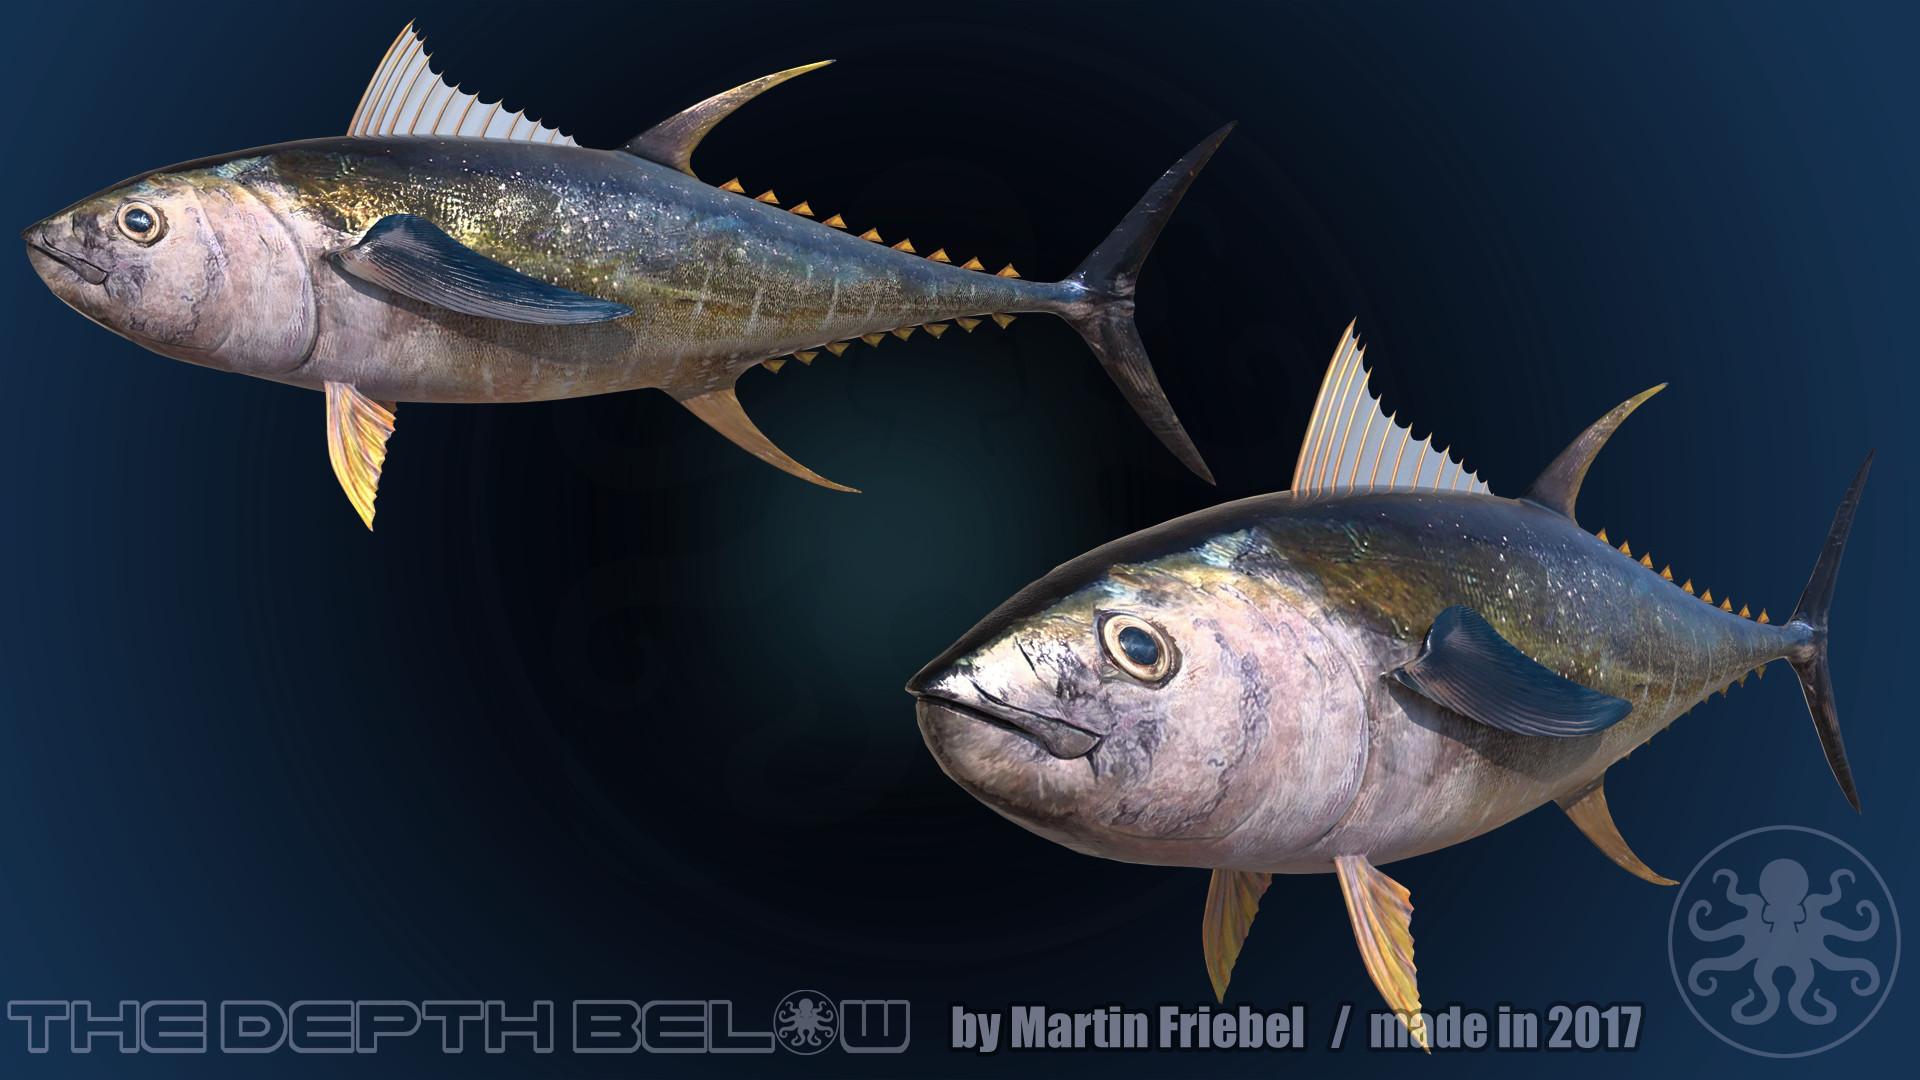 Yellowfin Tuna Depth Below, Martin Friebel